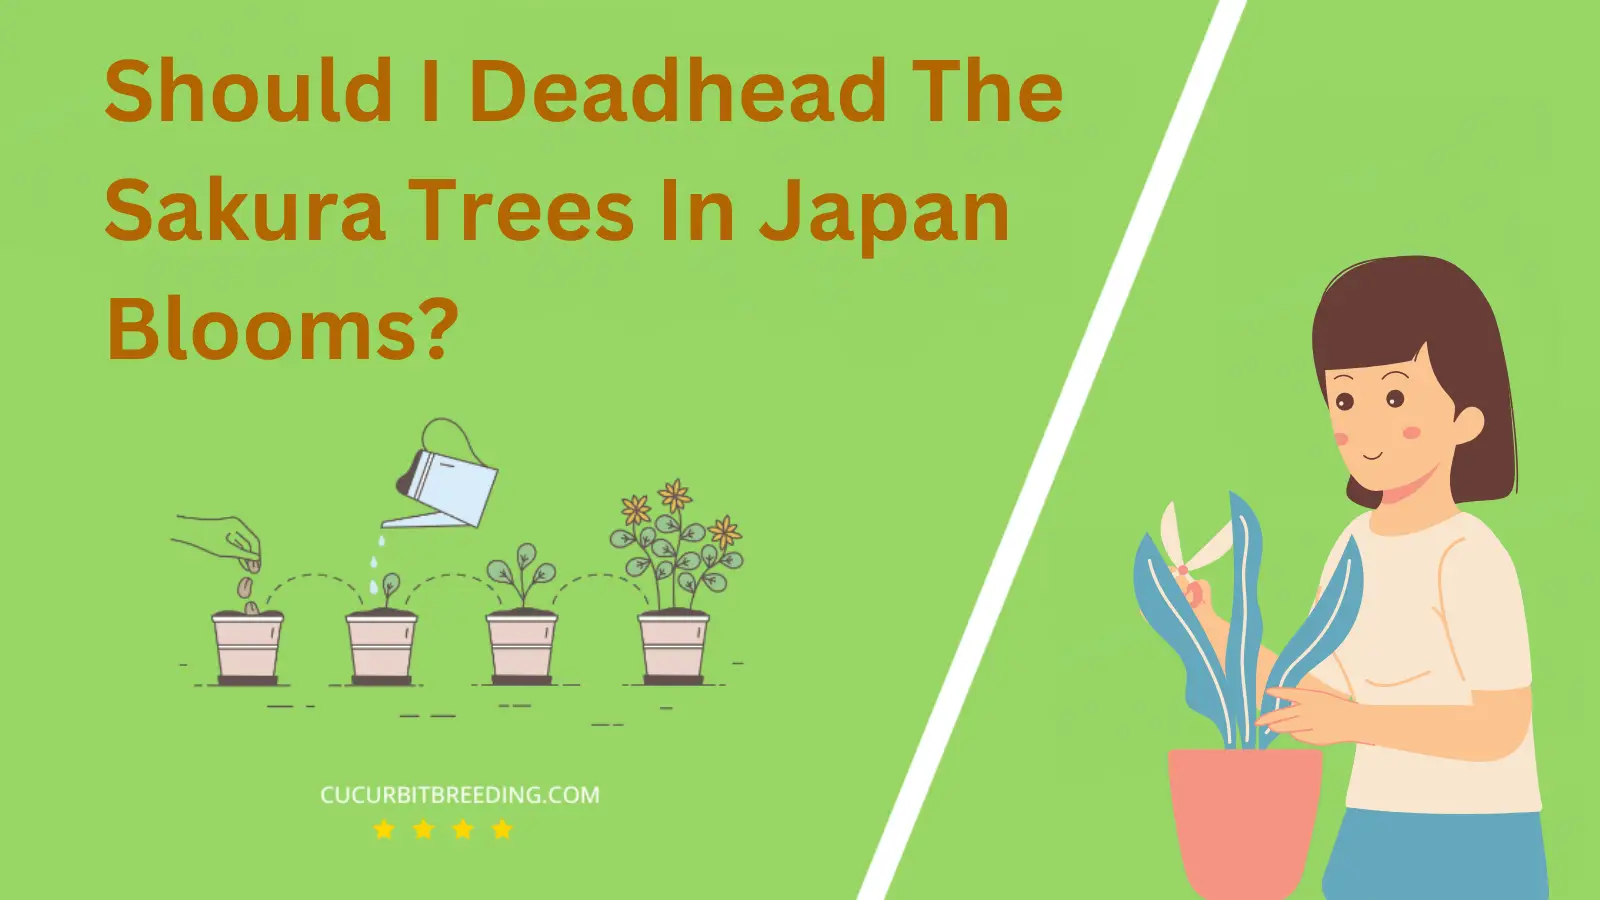 Should I Deadhead The Sakura Trees In Japan Blooms?